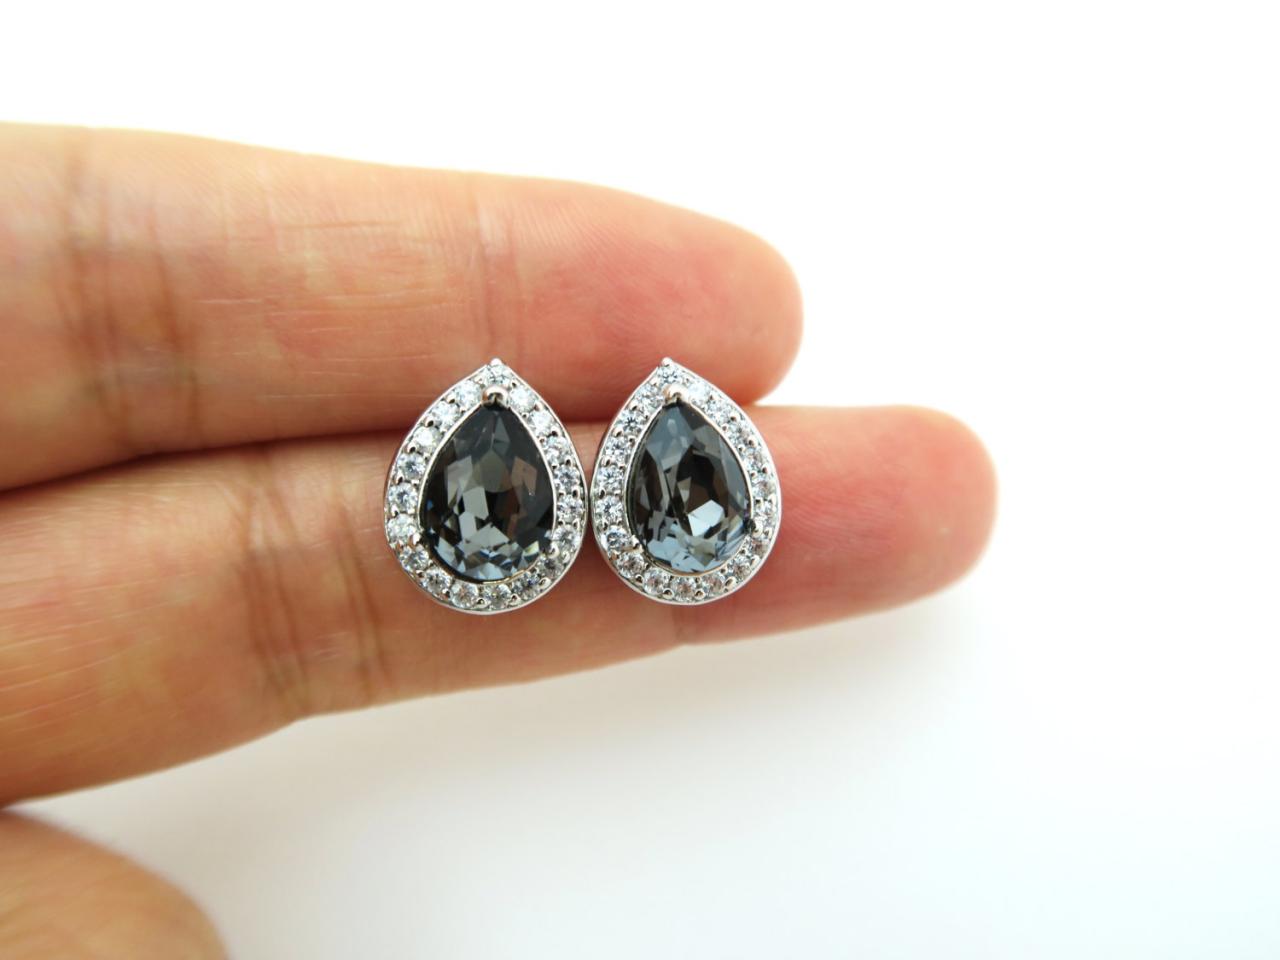 Silver Night Black Earrings Swarovski Crystal Teardrop Stud Earrings Wedding Jewelry Bridesmaid Gift Black Earrings (e303)